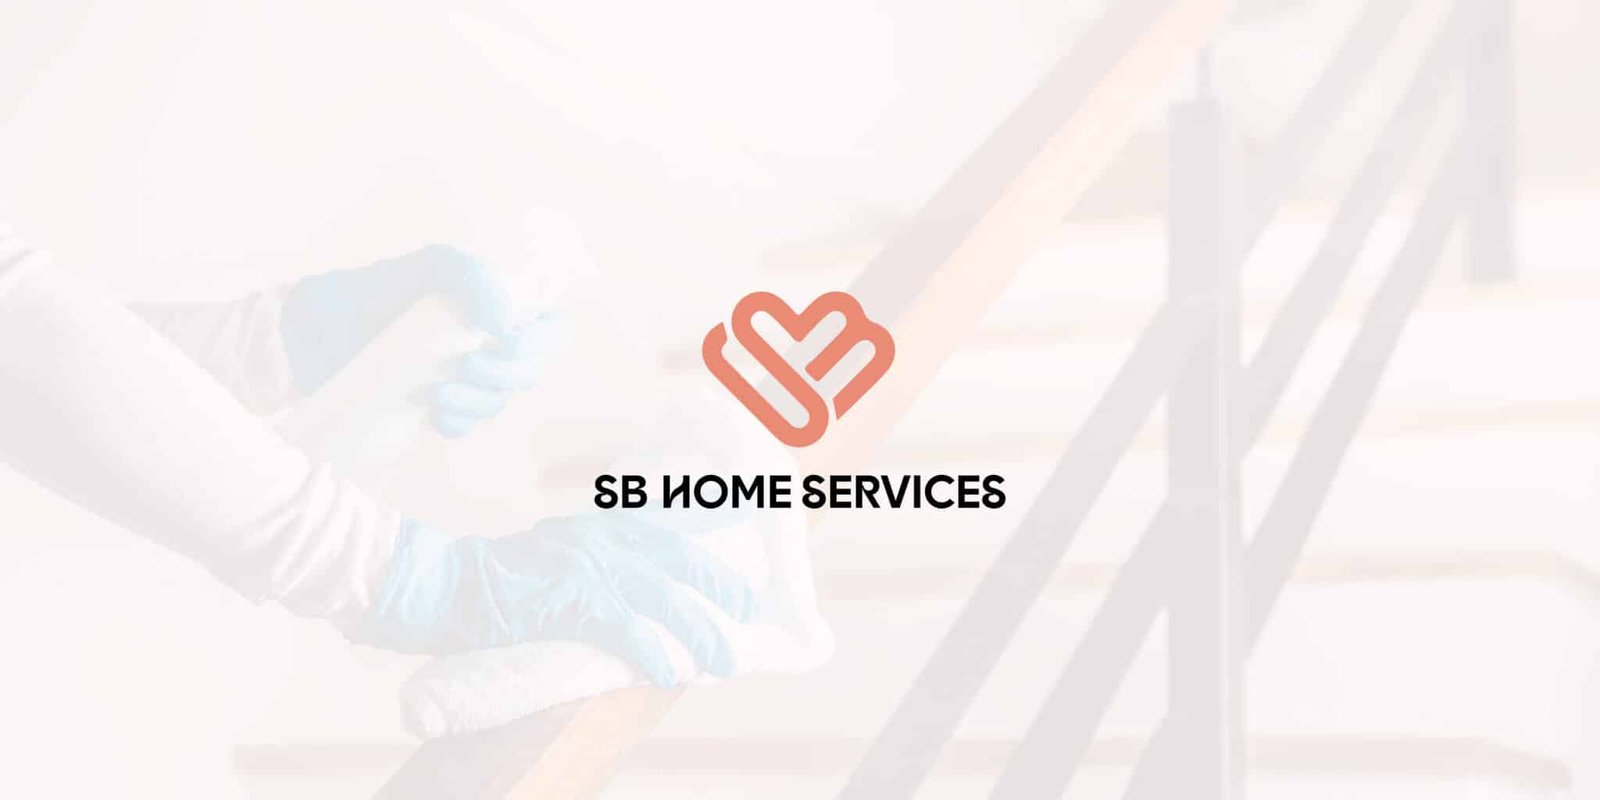 SB Home Services